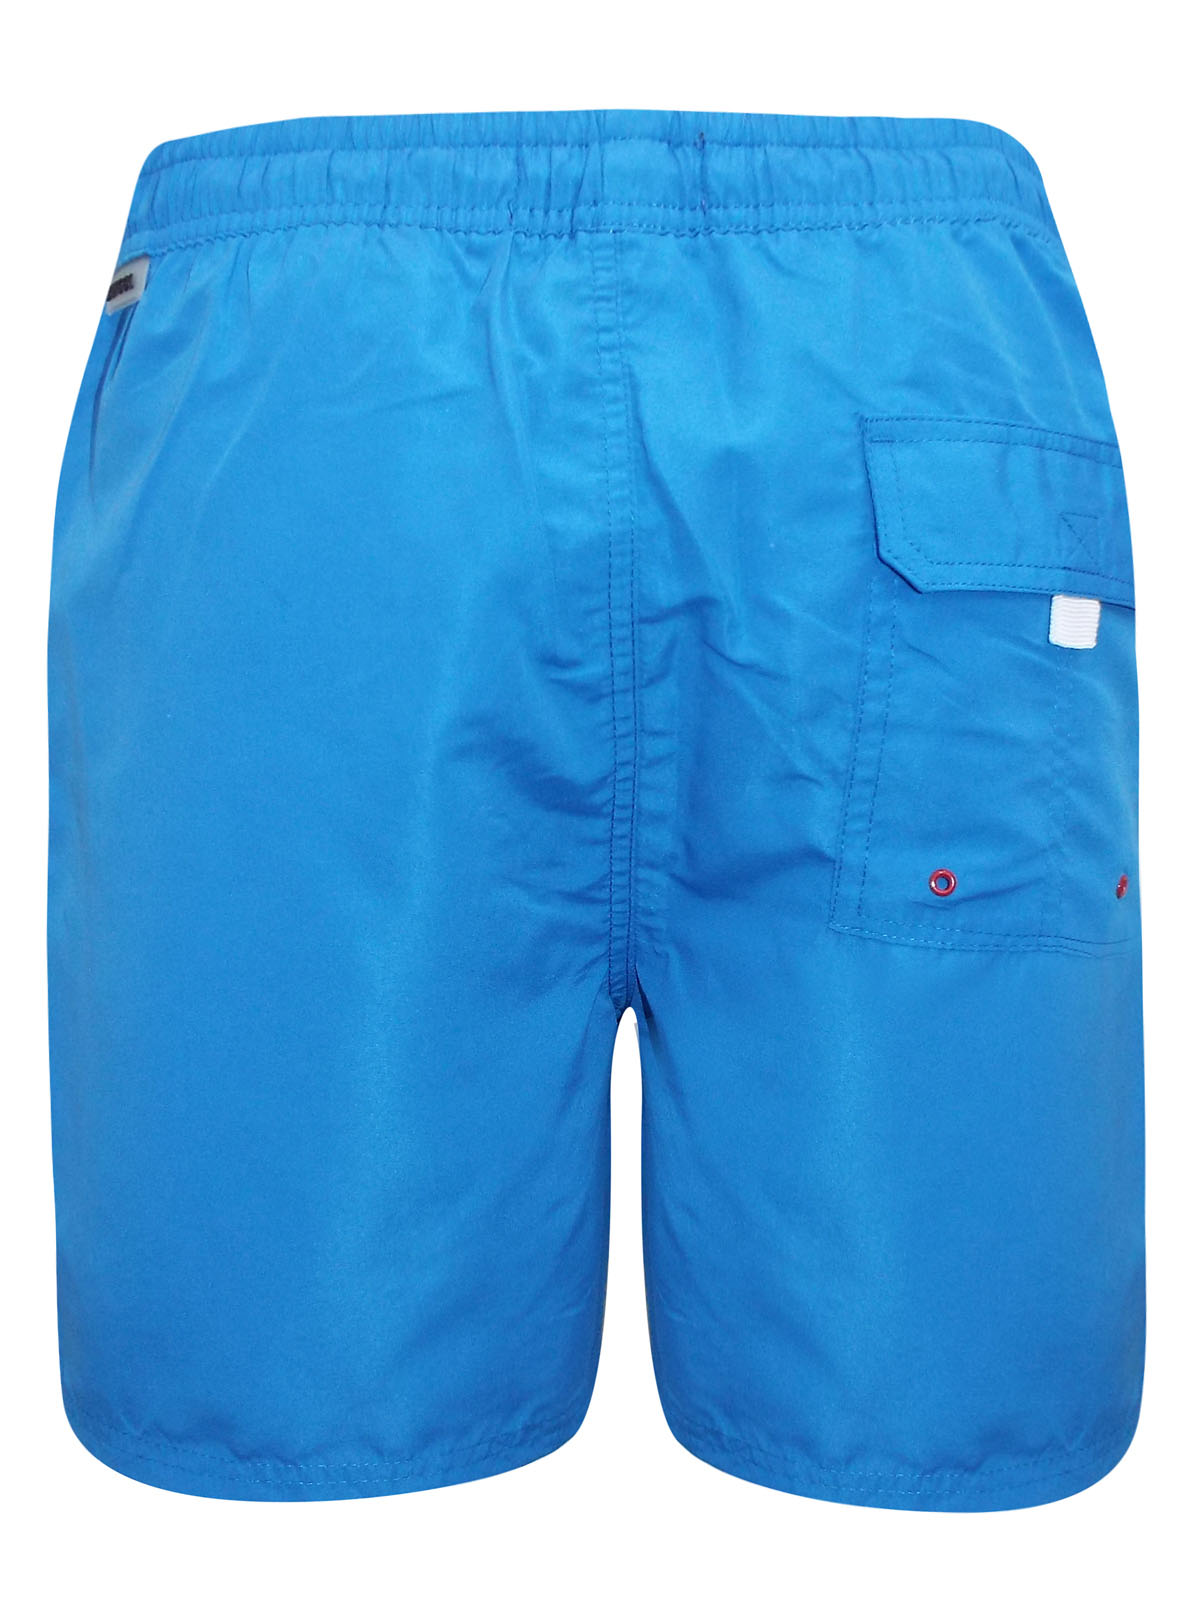 Kangol - - Kangol ASSORTED Gradient Branded Side Swim Shorts - Size Medium